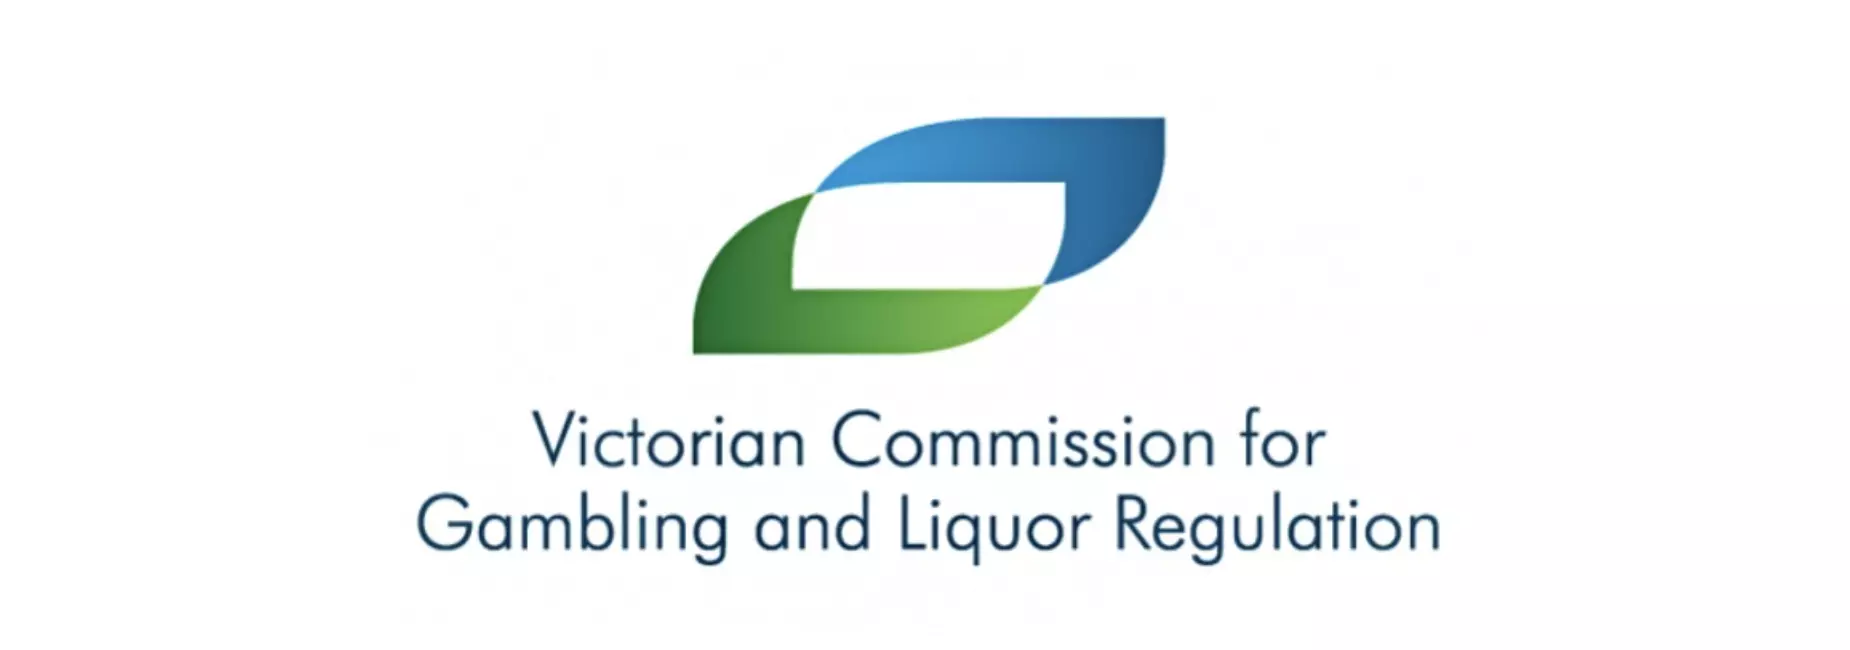 Negara Bagian Victoria Australia, atau disingkat VCGLR